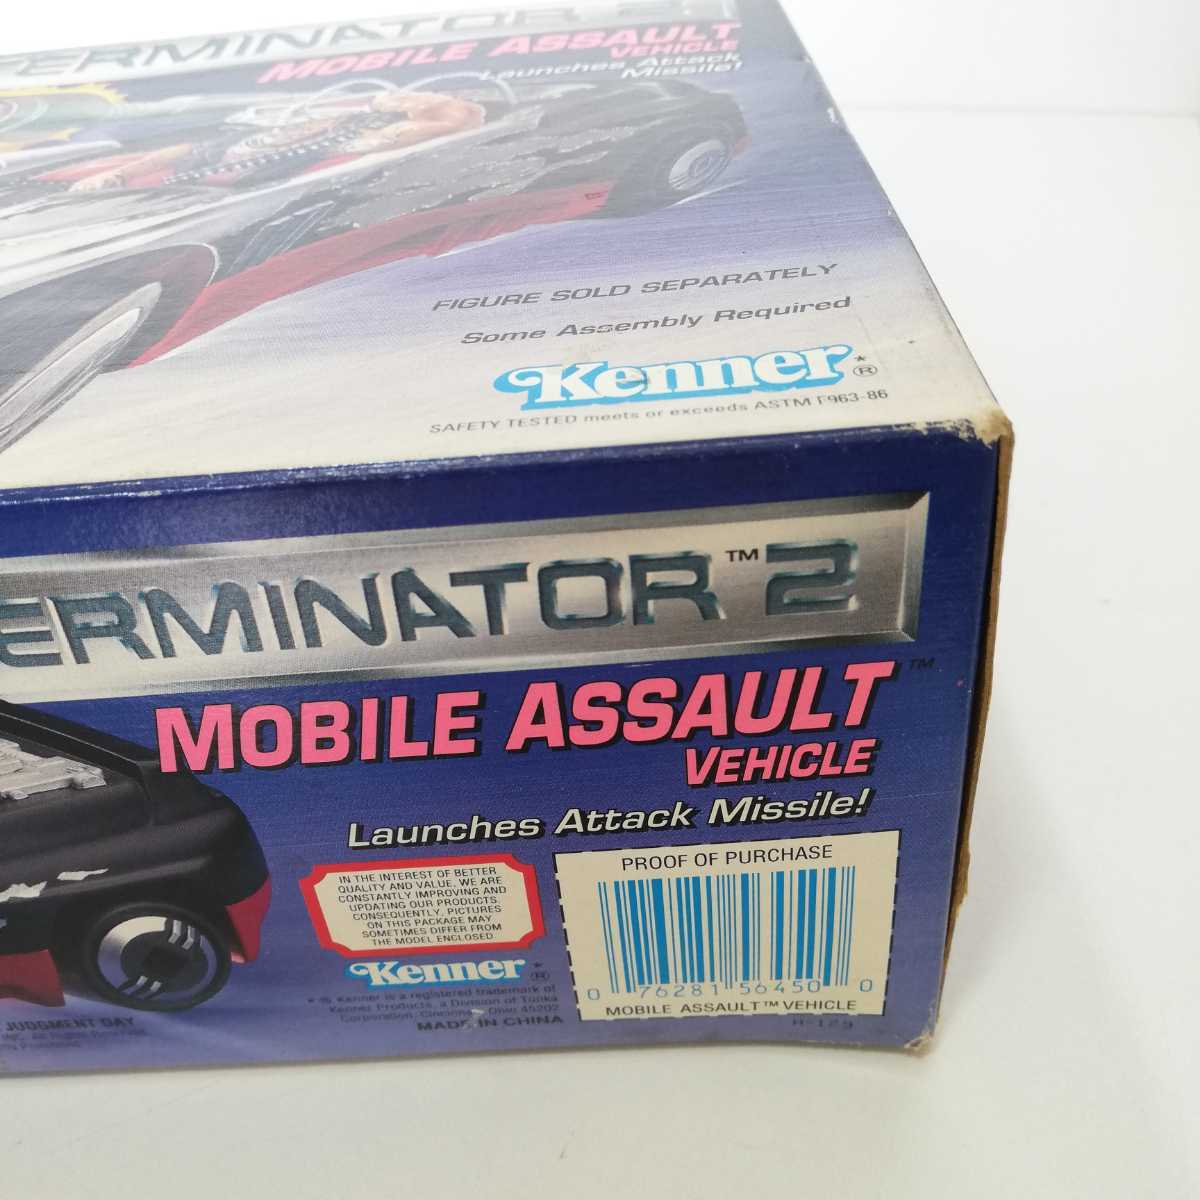 1991 год Kenner TERMINATOR 2 MOBILE ASSAULT VEHICLE Old kena- Terminator 2 Mobil *a обезьяна to* vehicle фигурка нераспечатанный 